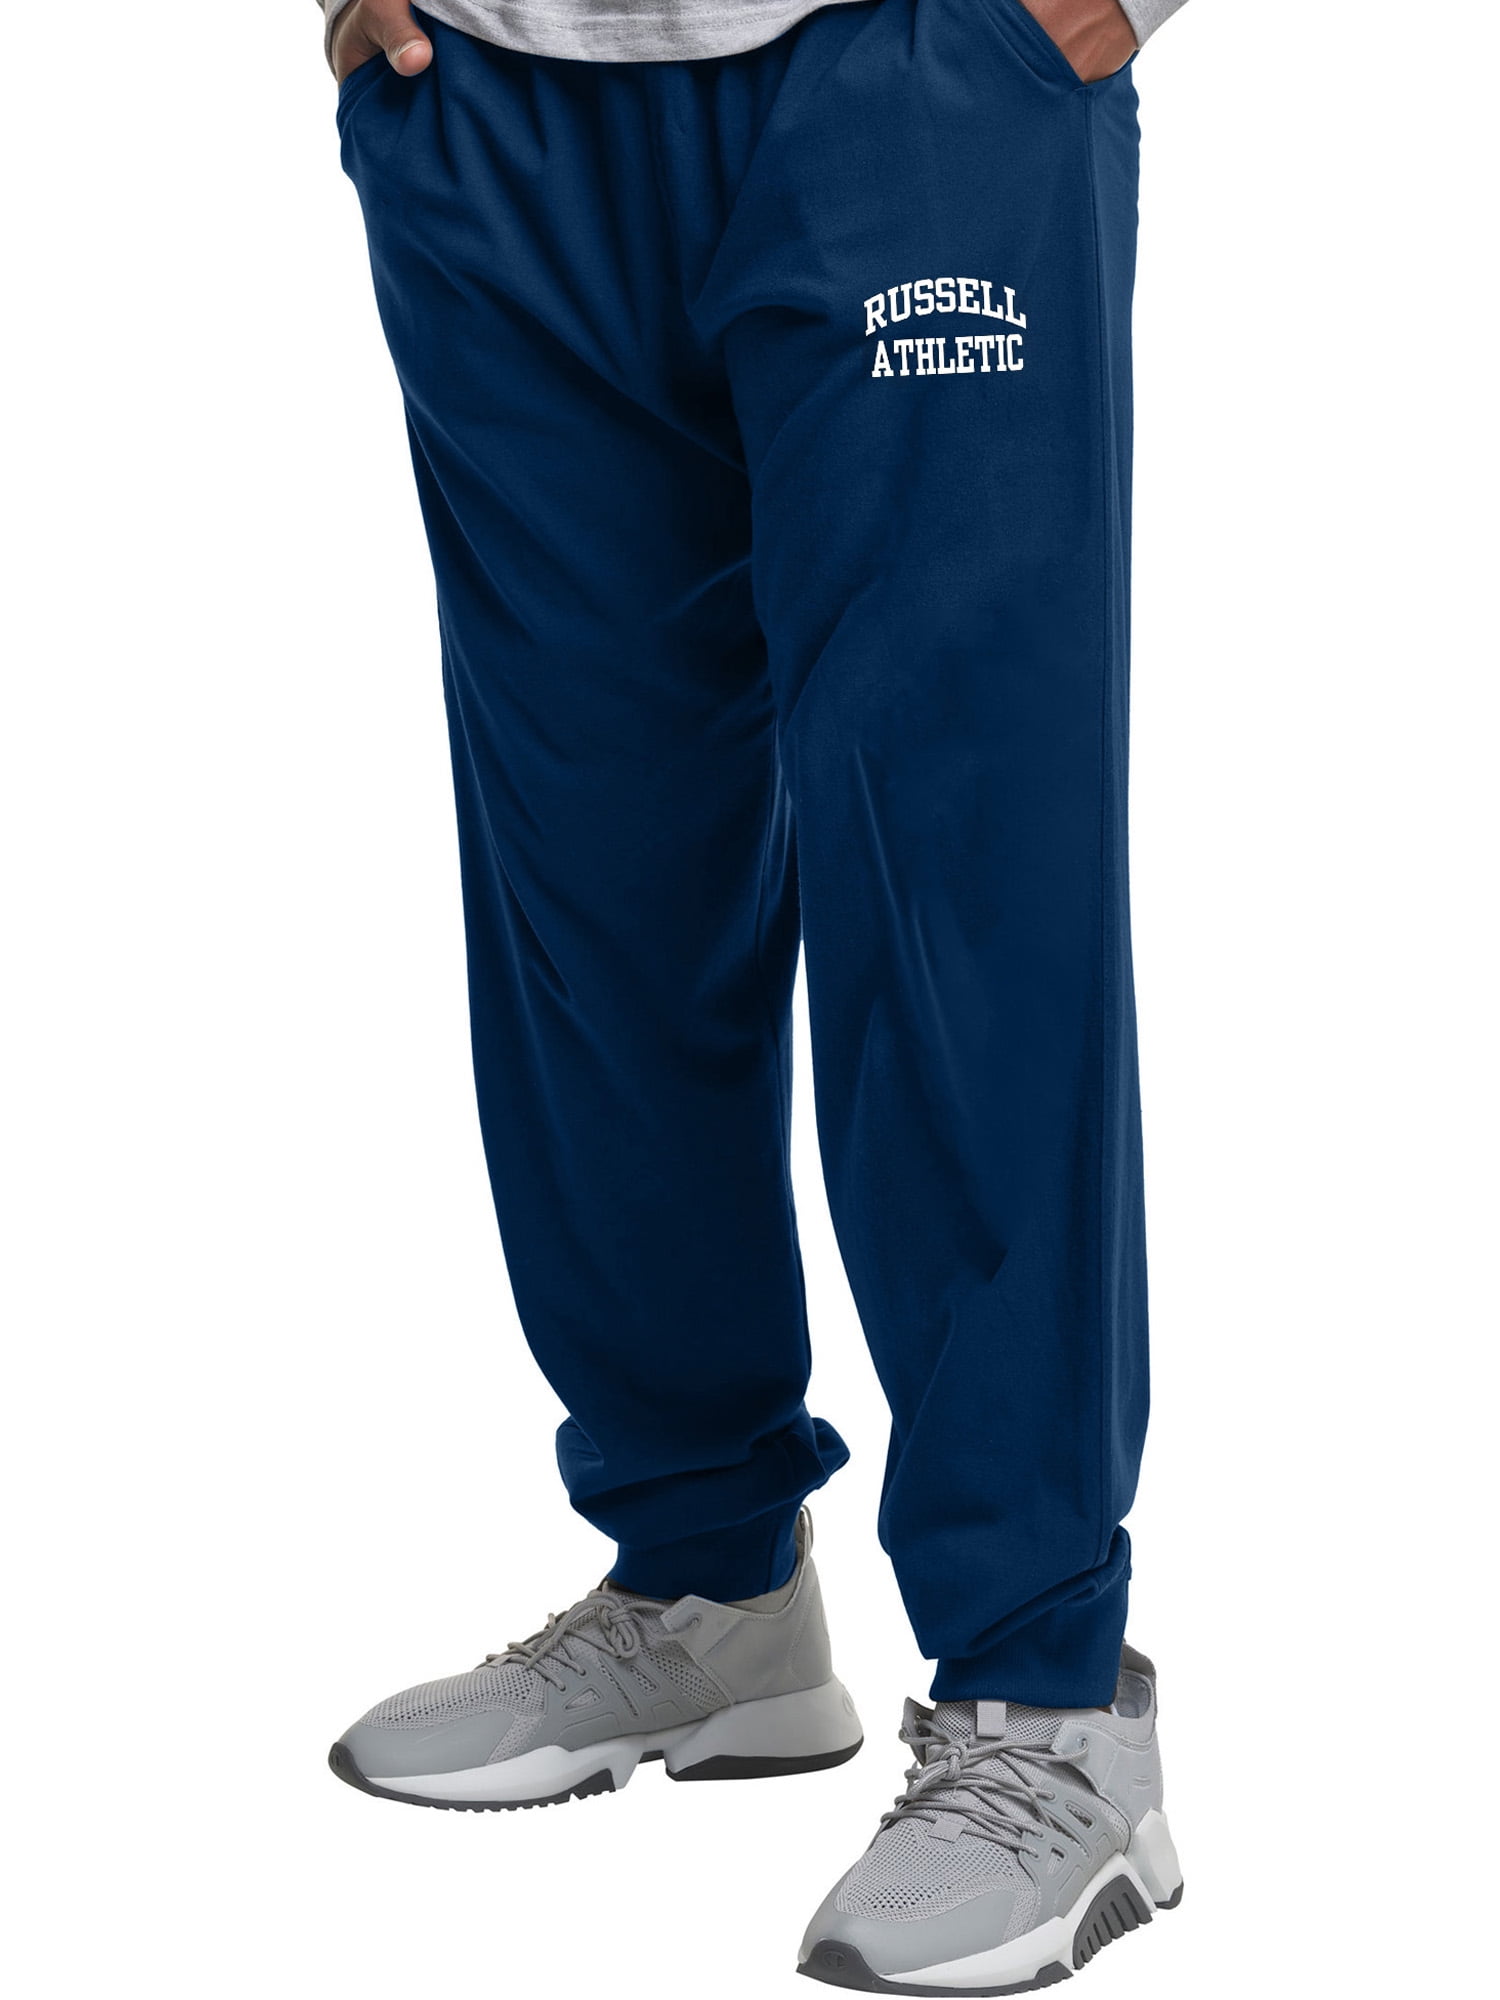 Russell Athletic Pants Team Sports w/drawstring Size Medium Navy Blue NEW 